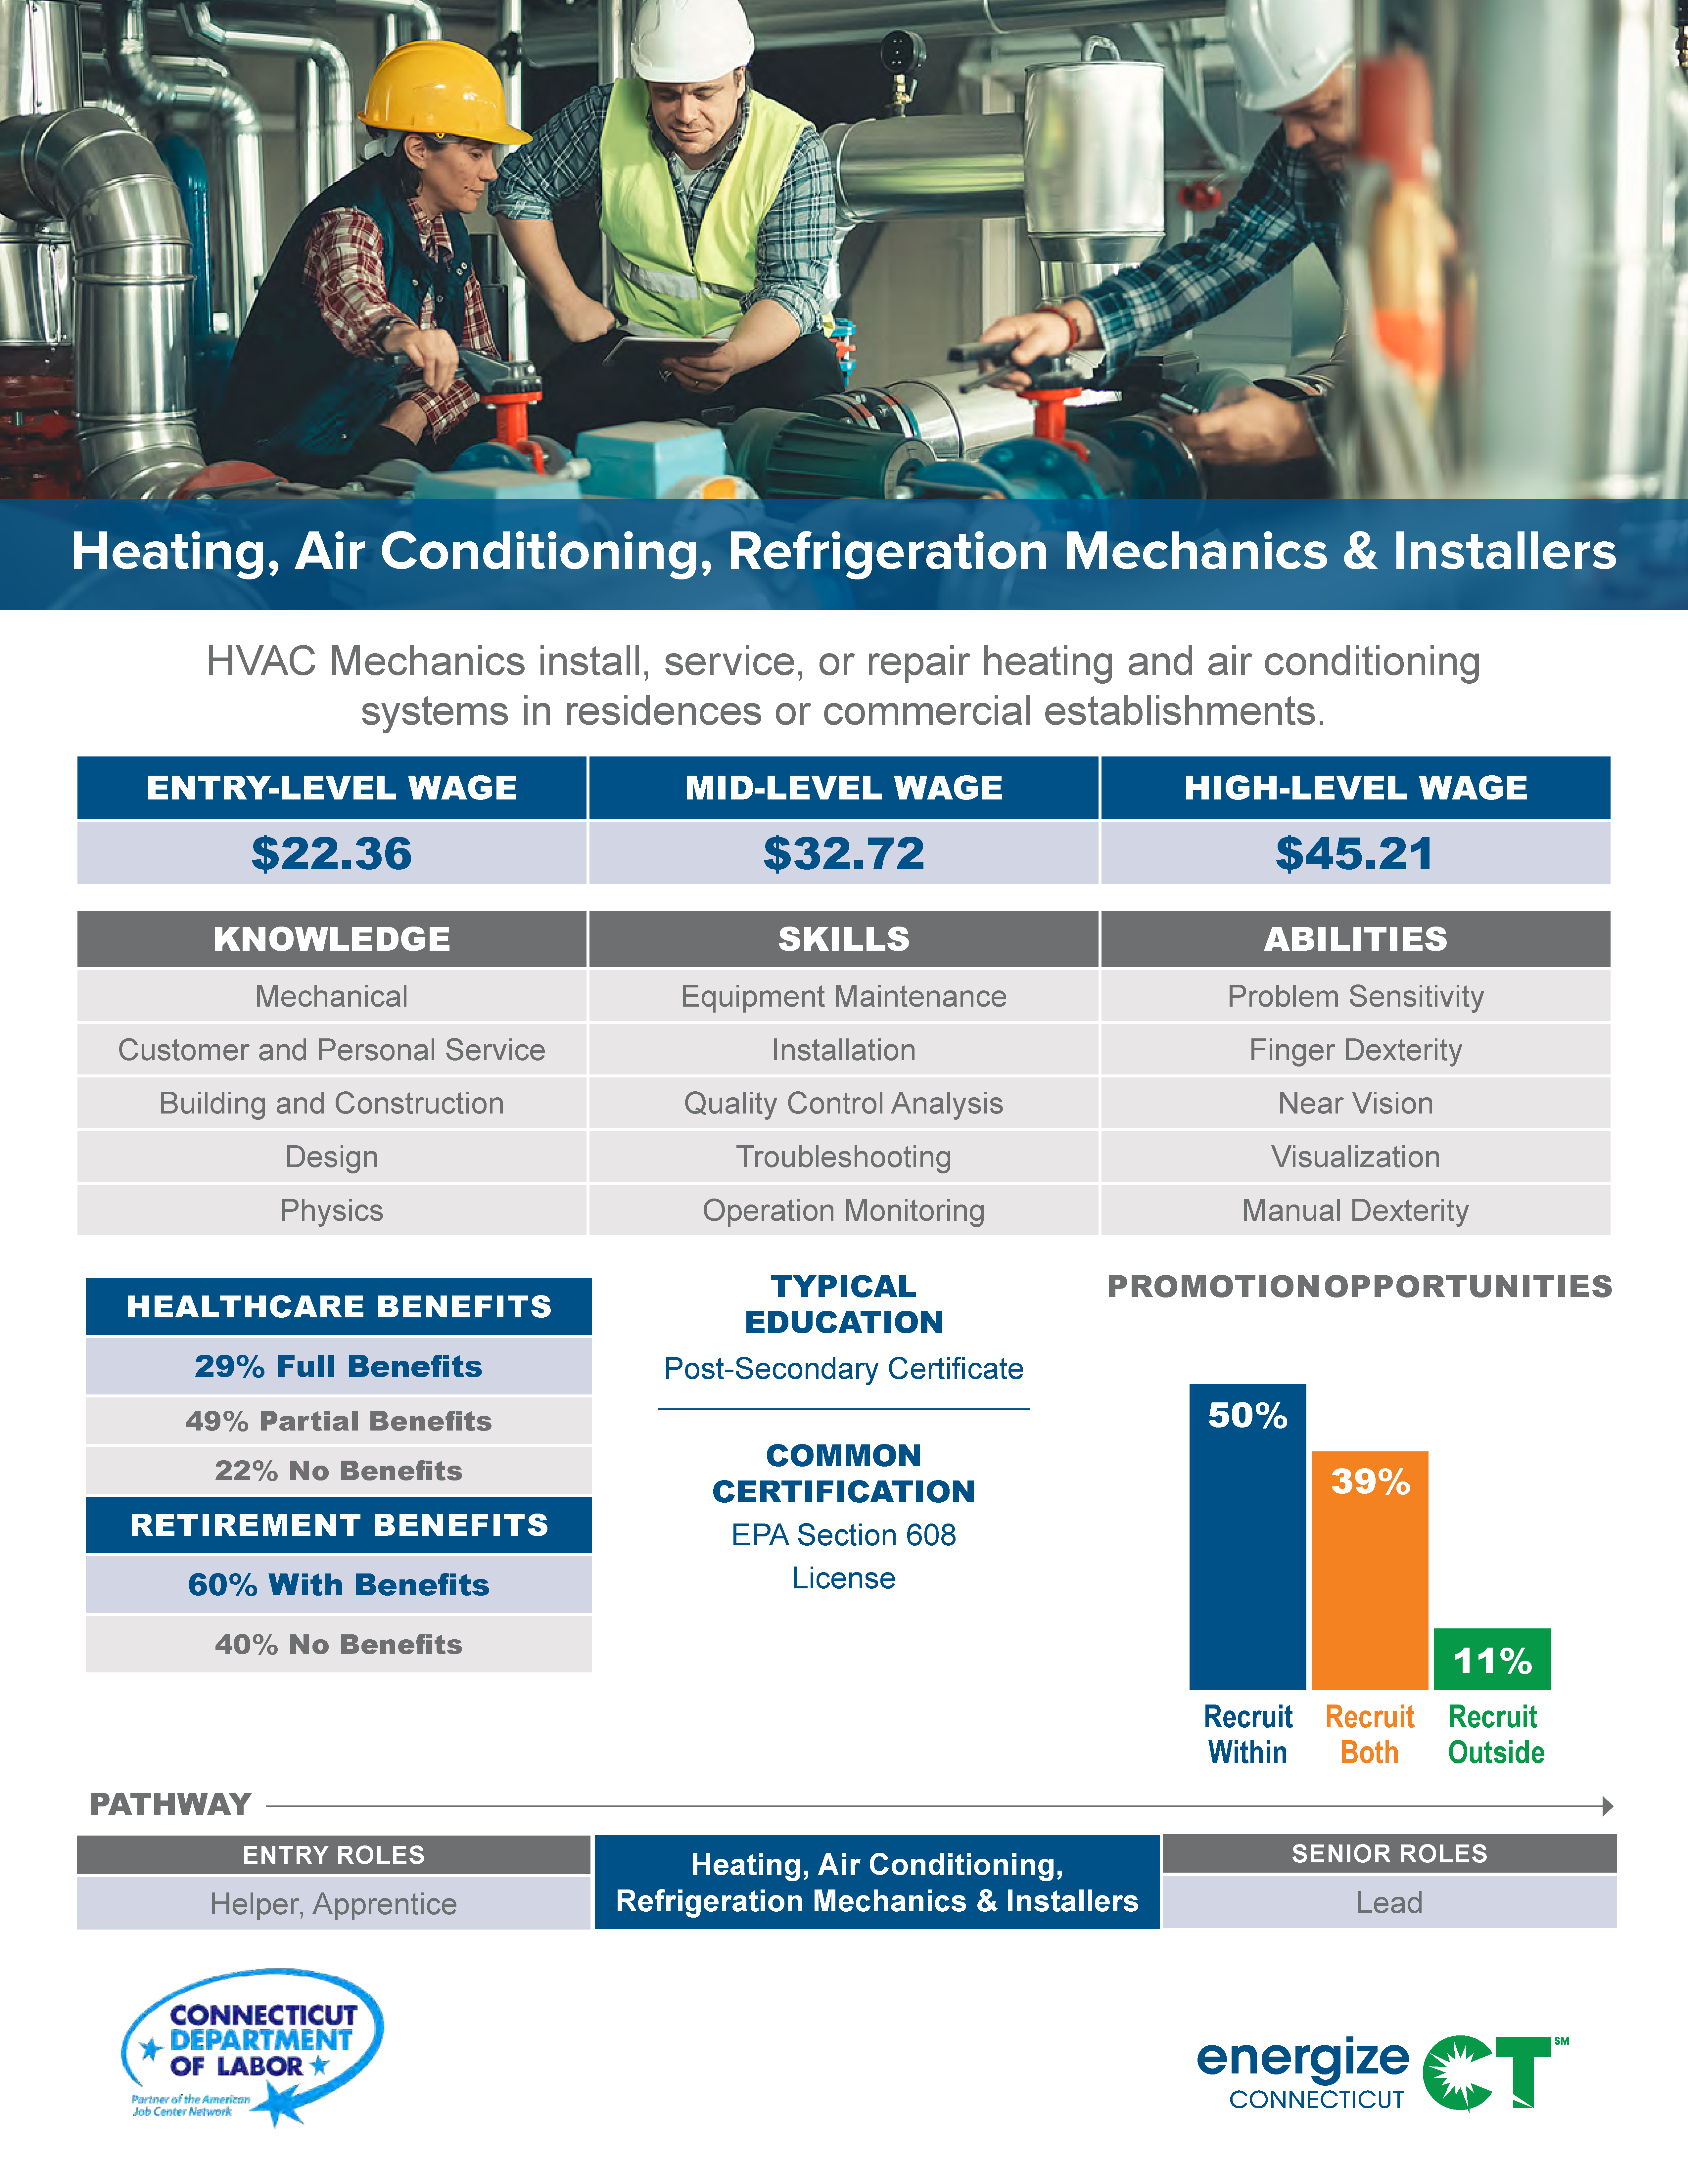 Heating, Air Conditioning, Refrigeration Mechanics & Installers